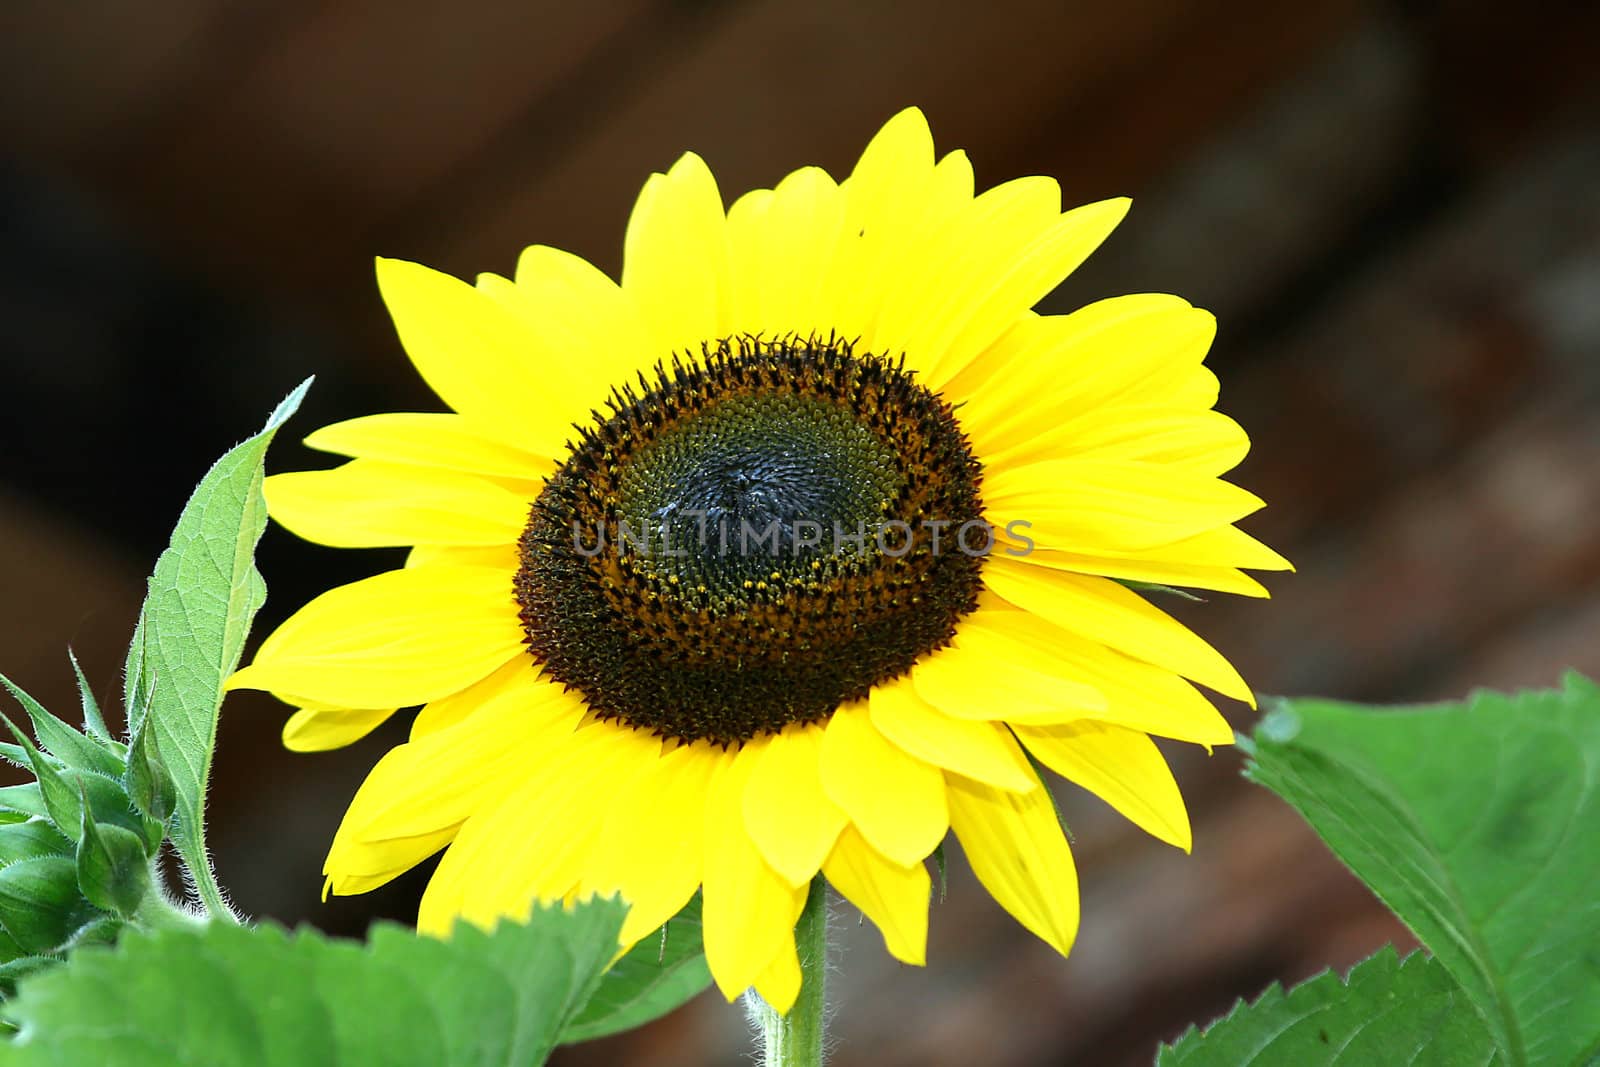 Sunflower by monner